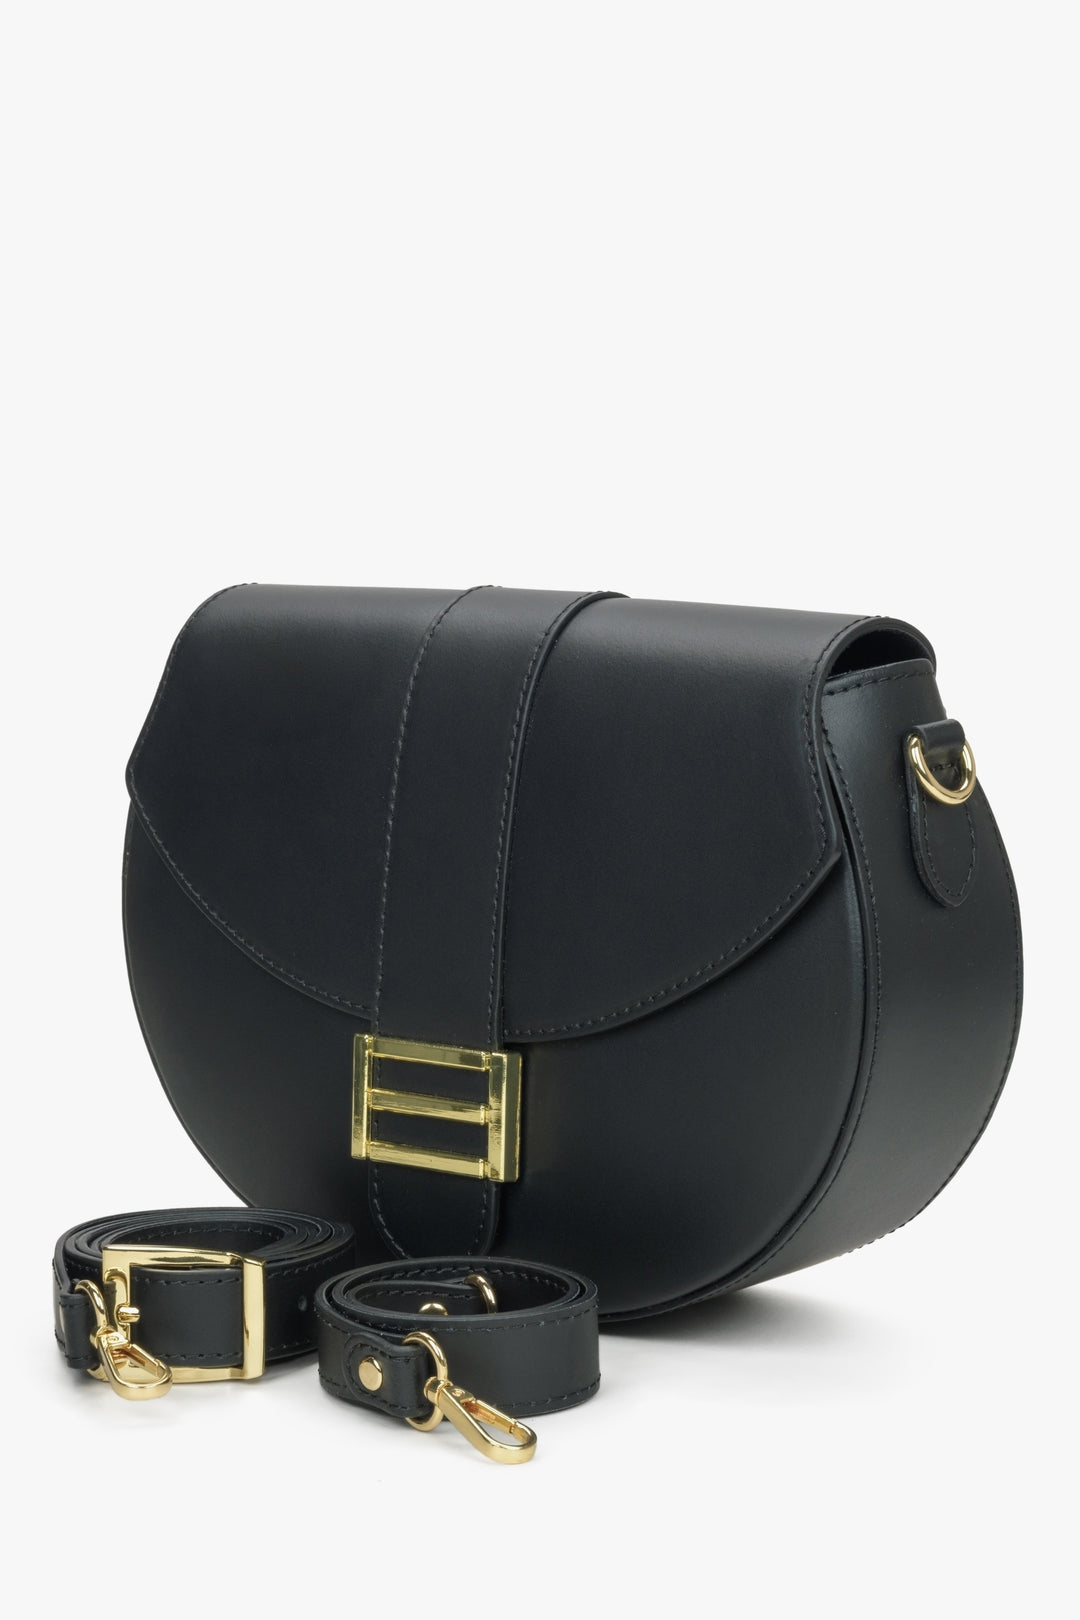 Women's black handbag made of premium Italian genuine leather by Estro.